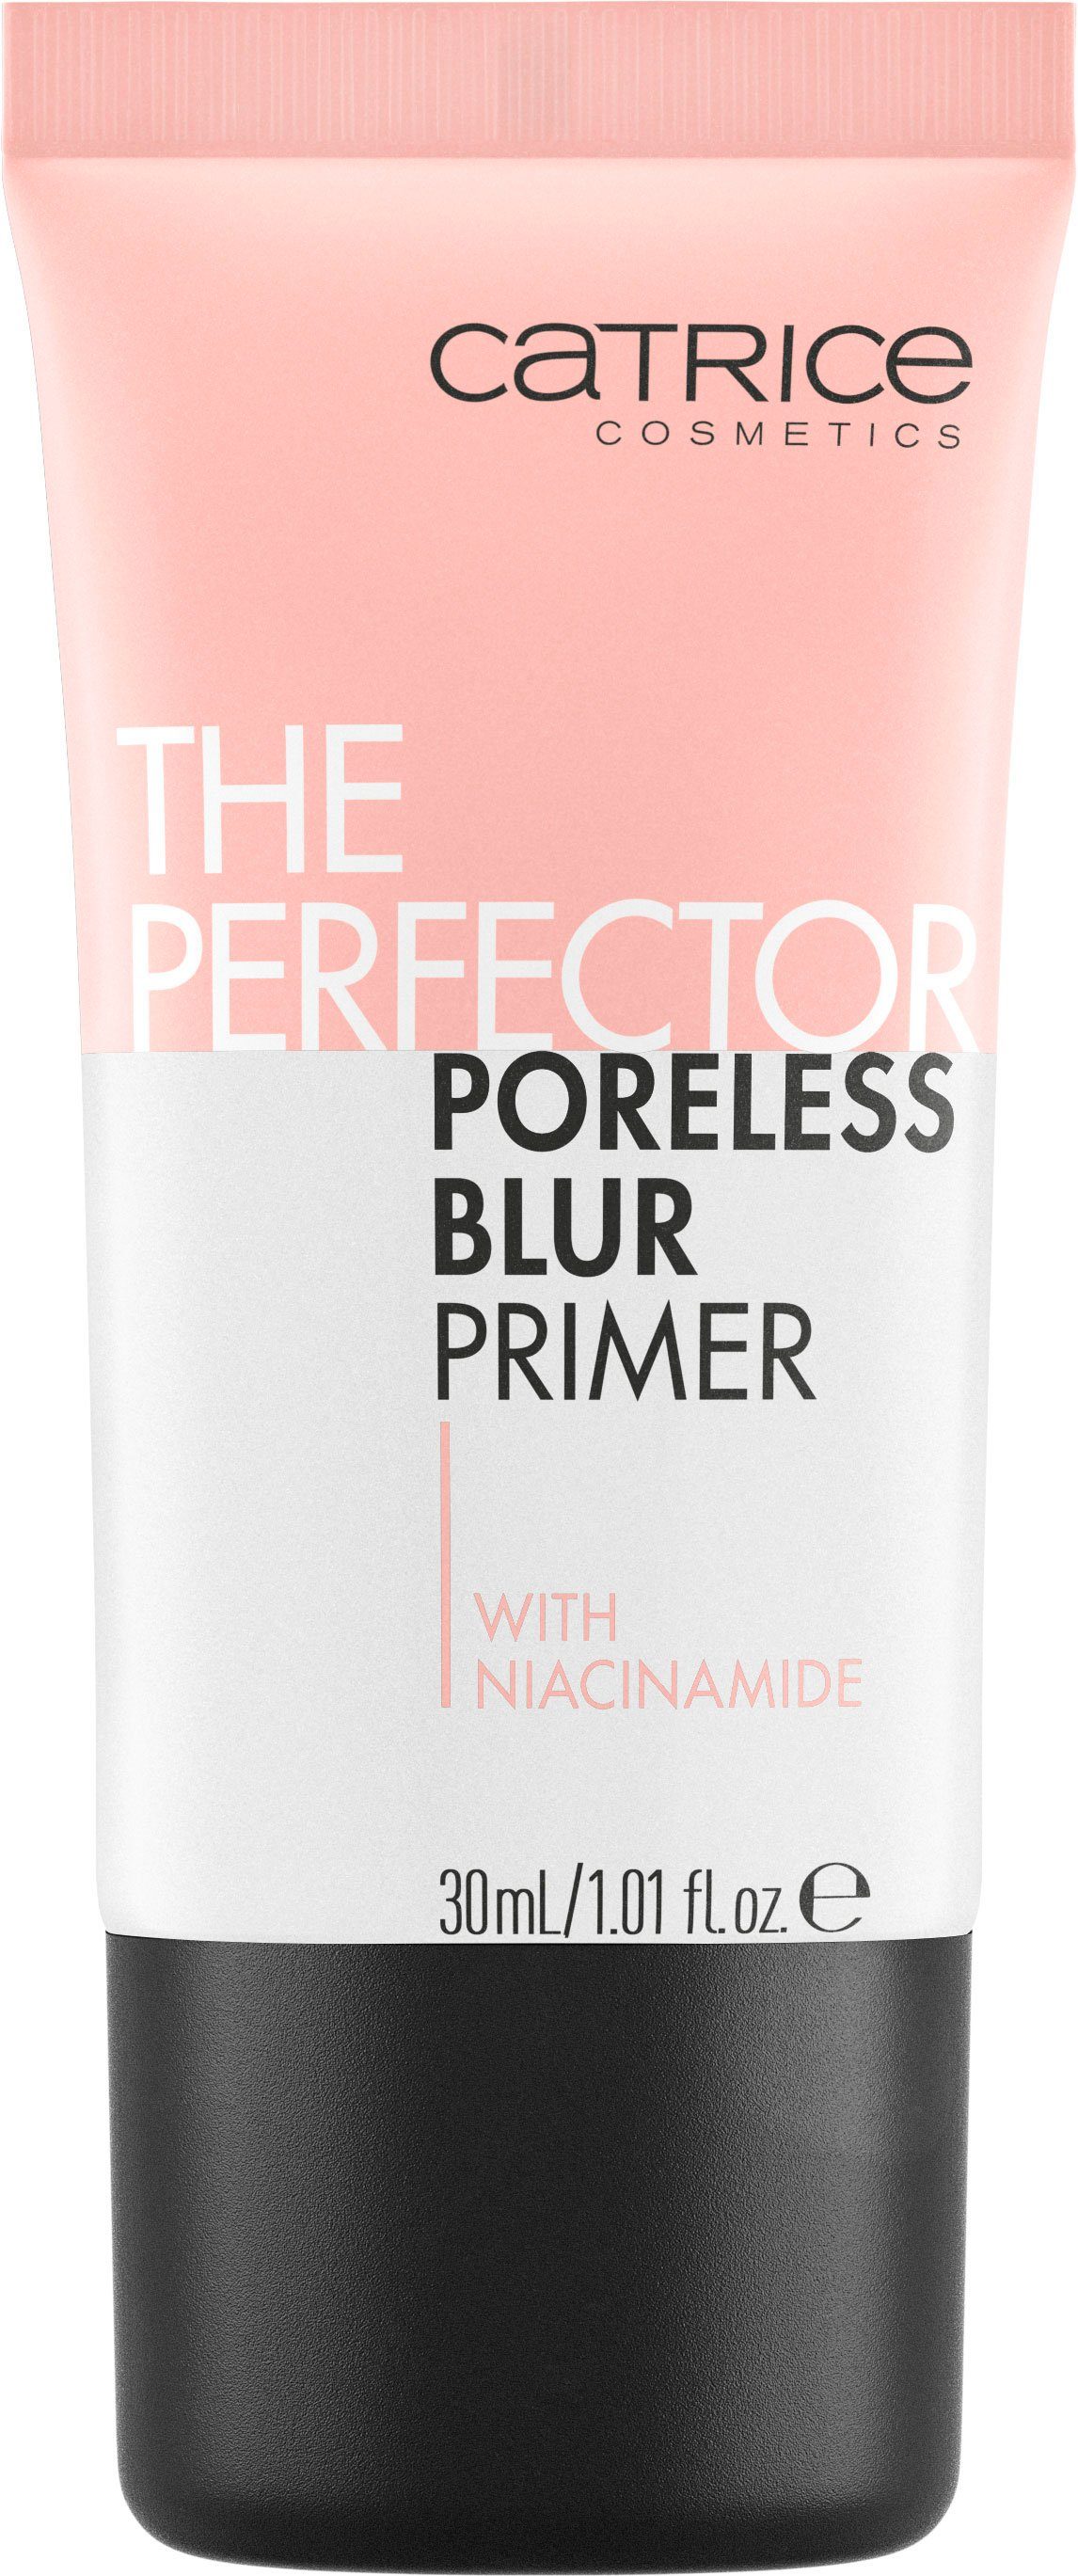 Catrice Primer The Perfector Primer, 3-tlg. Blur Poreless